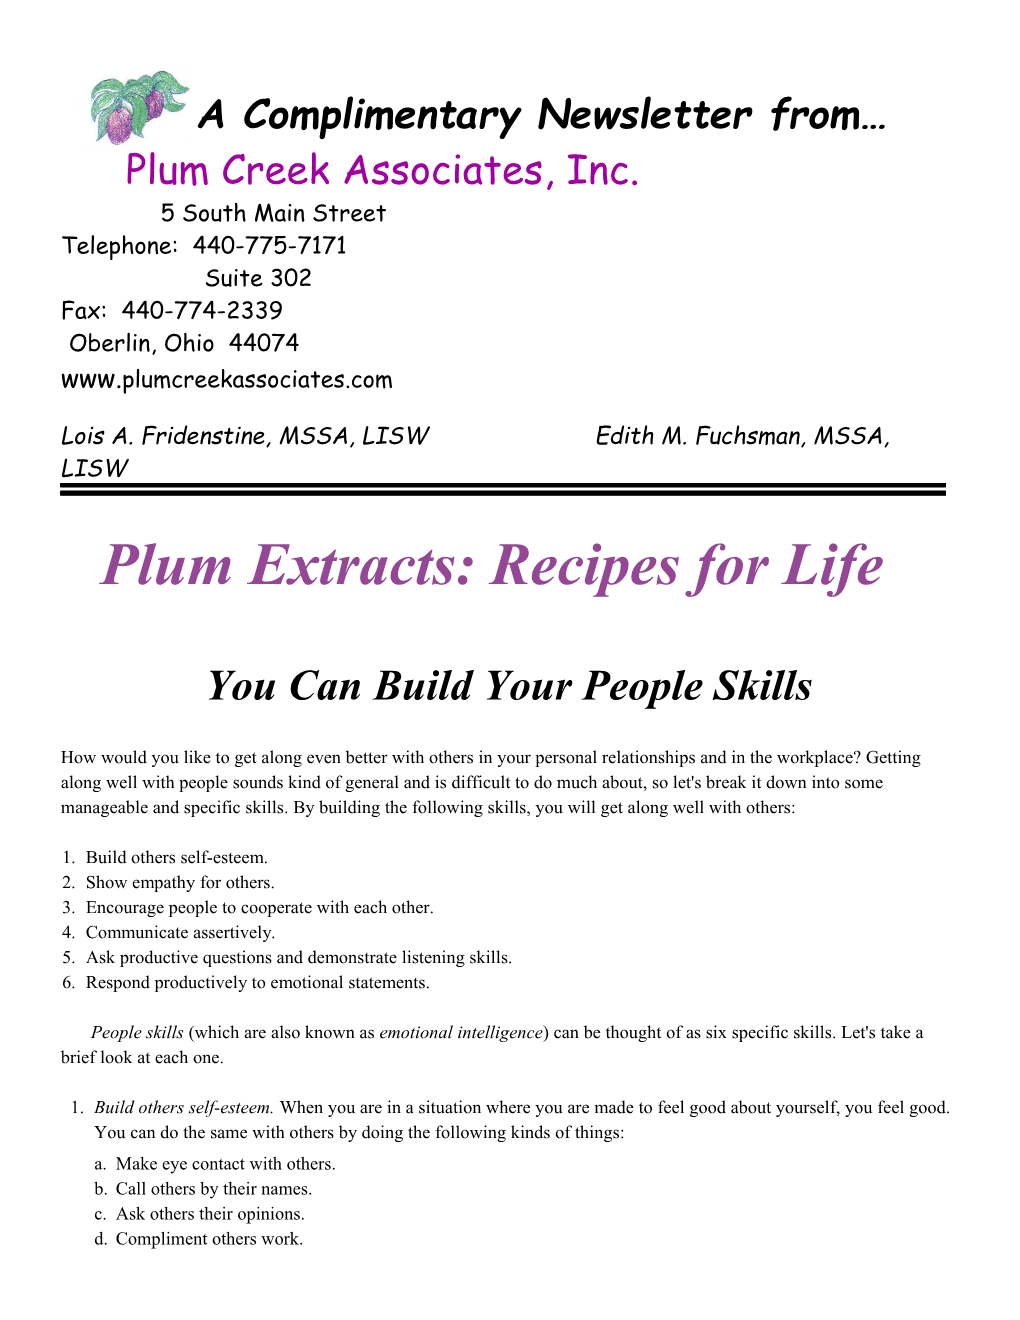 Plum Creek Associates, Inc